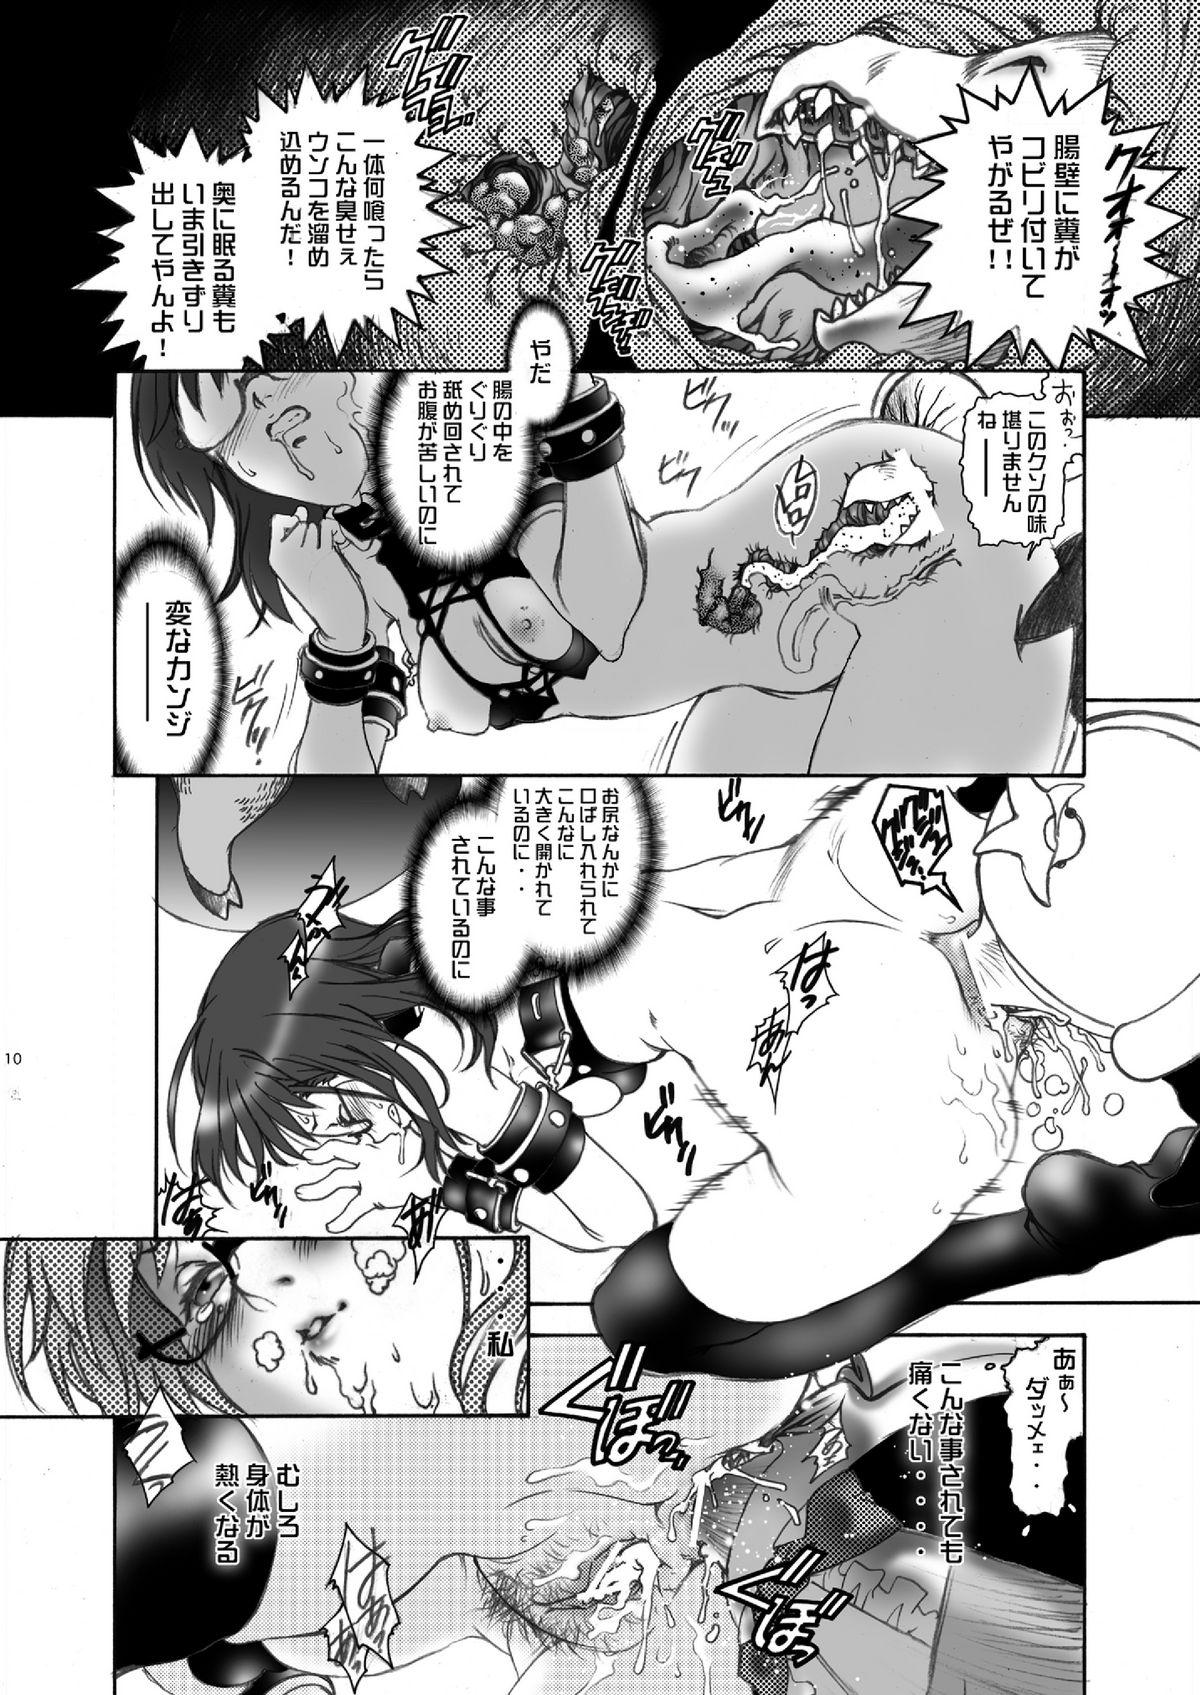 Fit Ittemasuyo! Saku-chan. - Yondemasuyo azazel san Art - Page 10